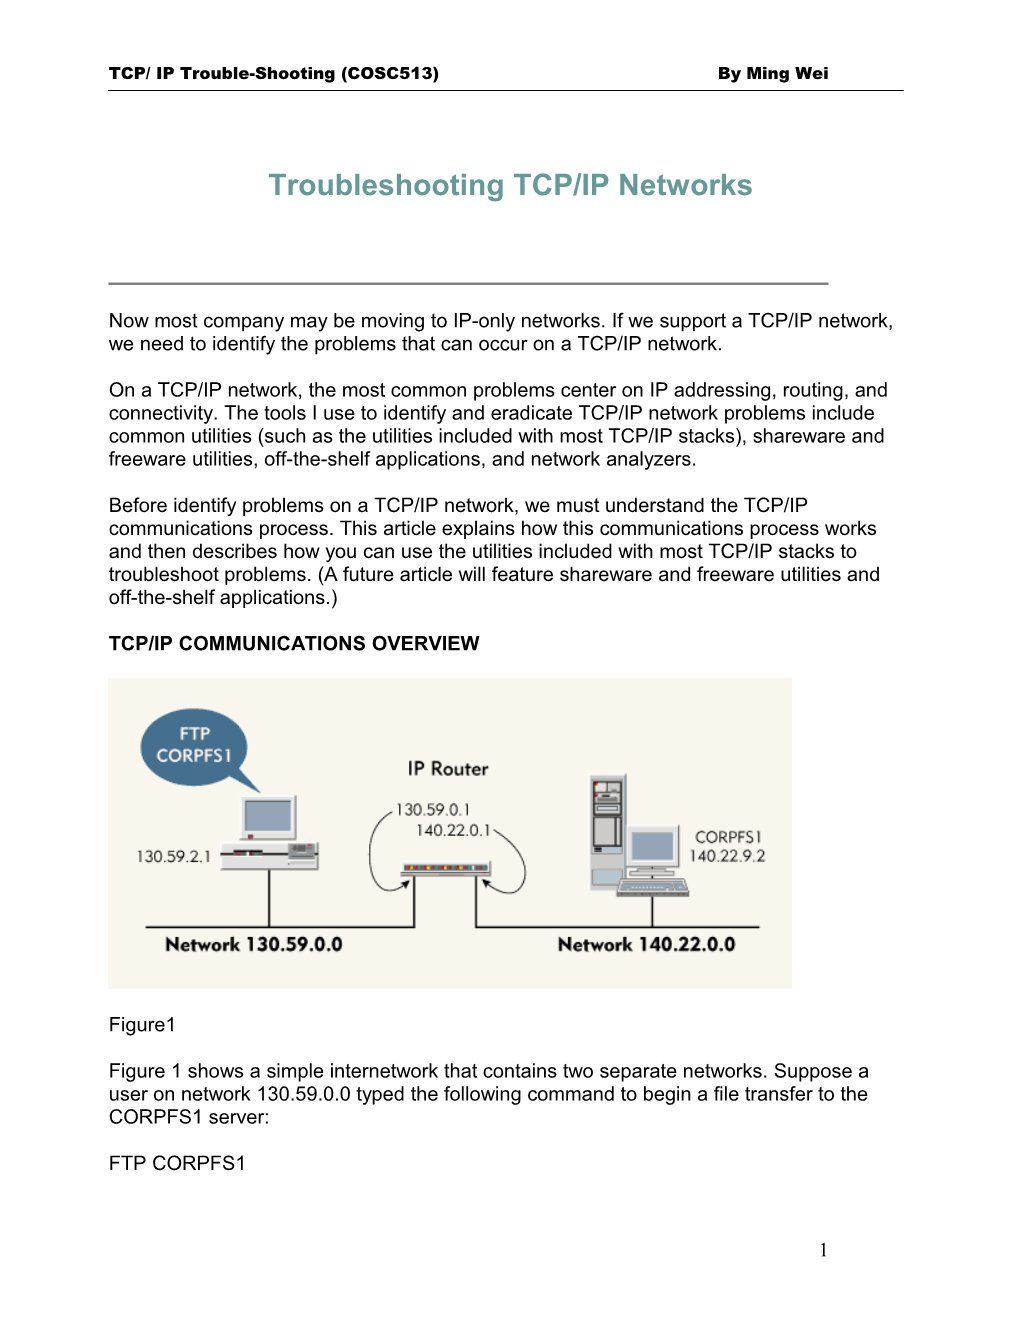 Troubleshootingtcp/IP Networks